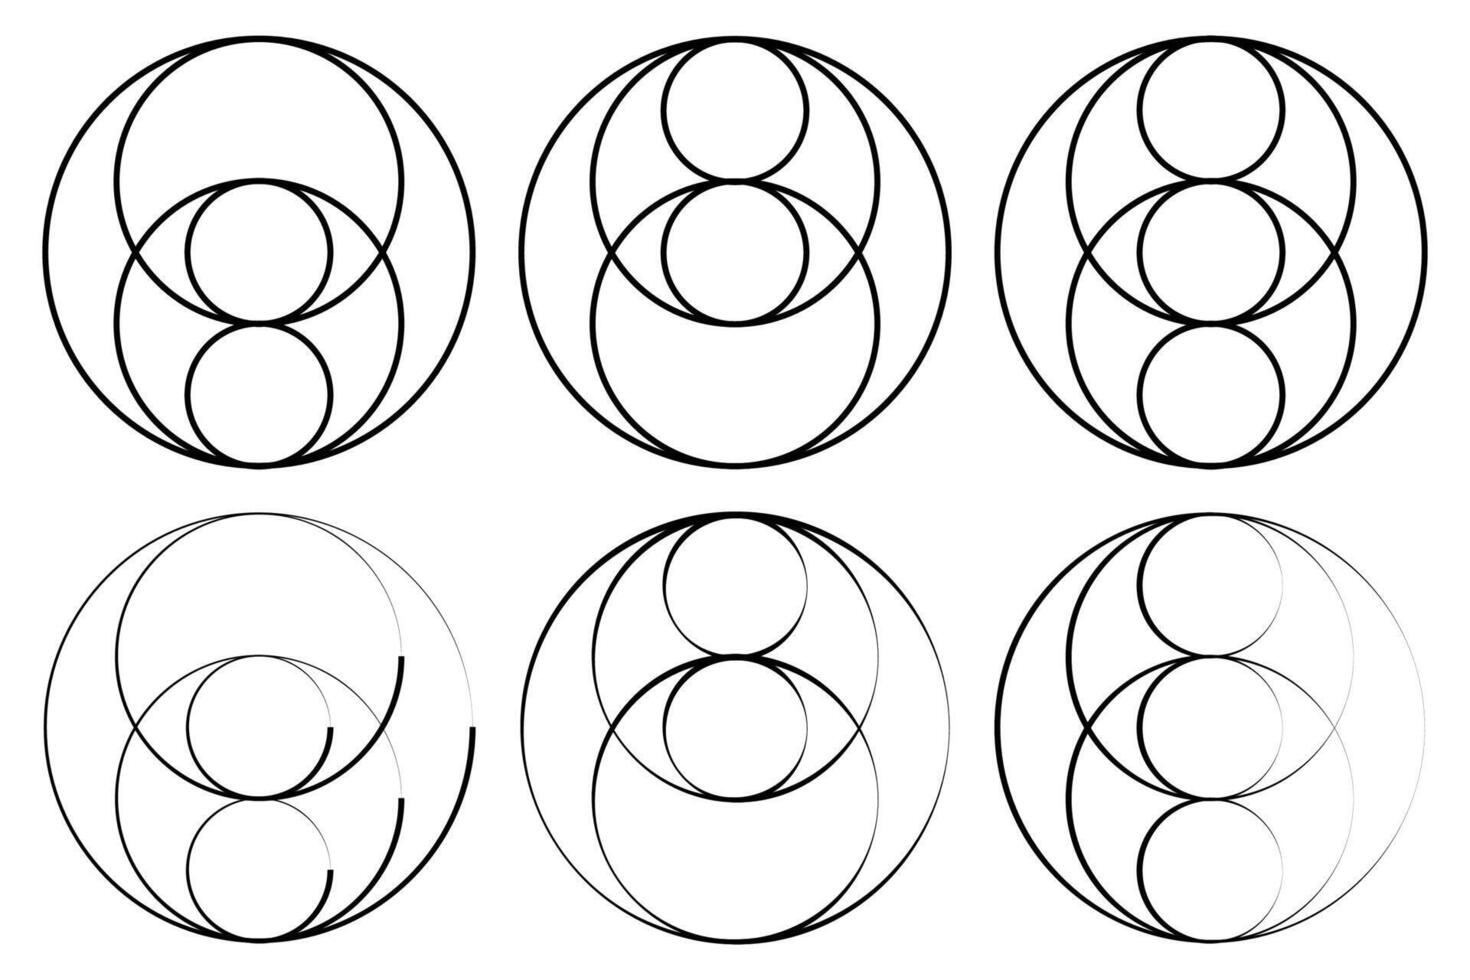 blaas piscis geometrie binnen lijnen cirkels illustratie. vector